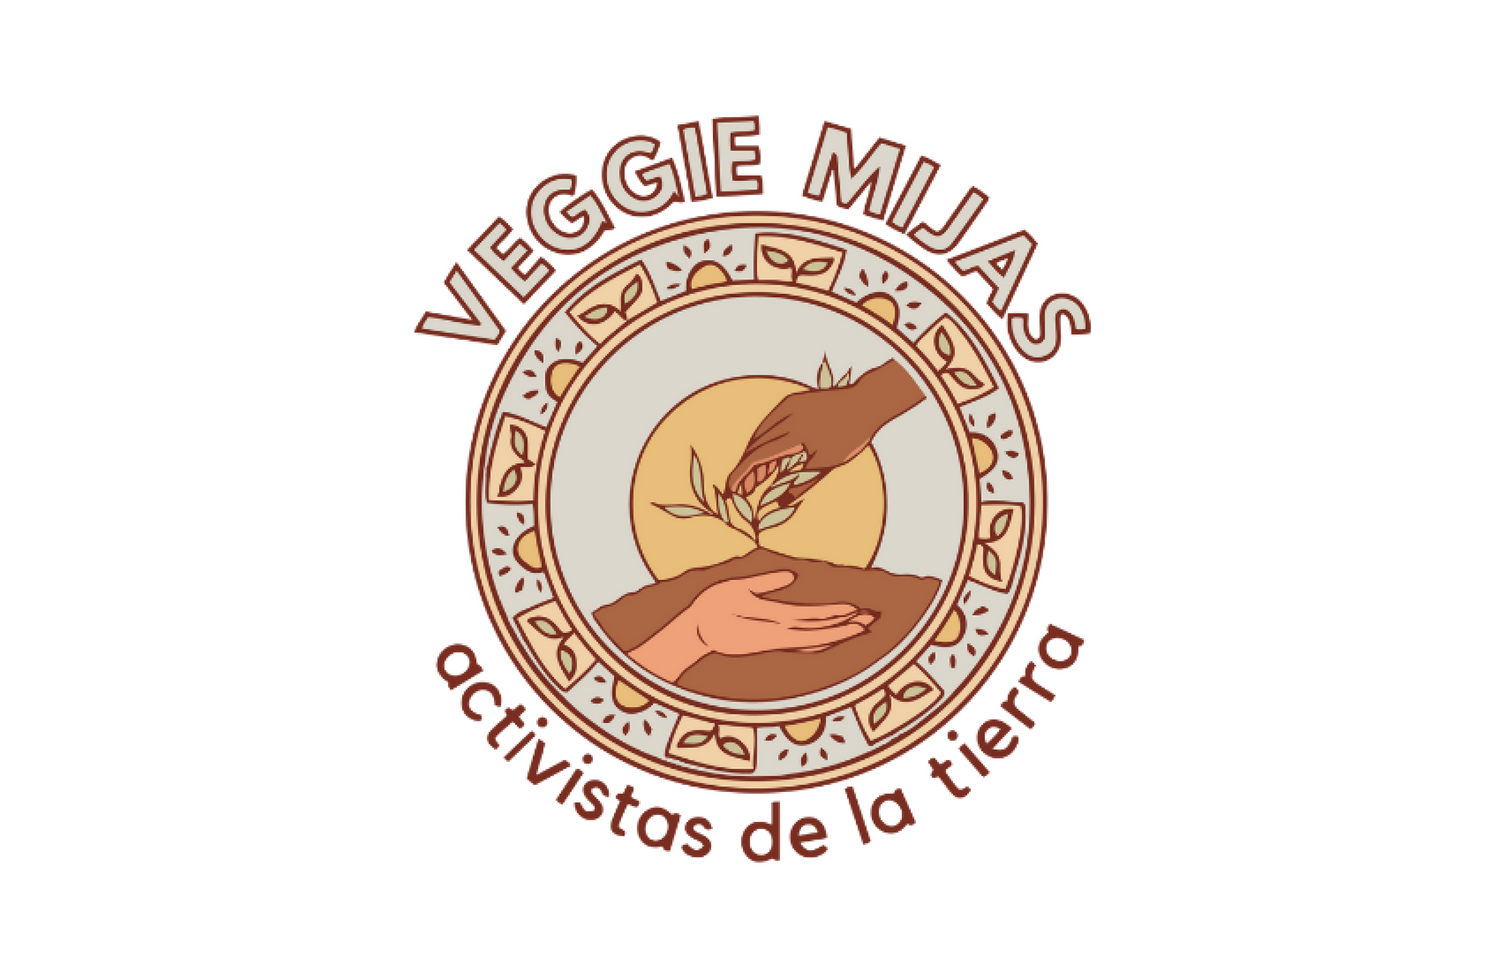 Eating More Plants with Veggie Mijas